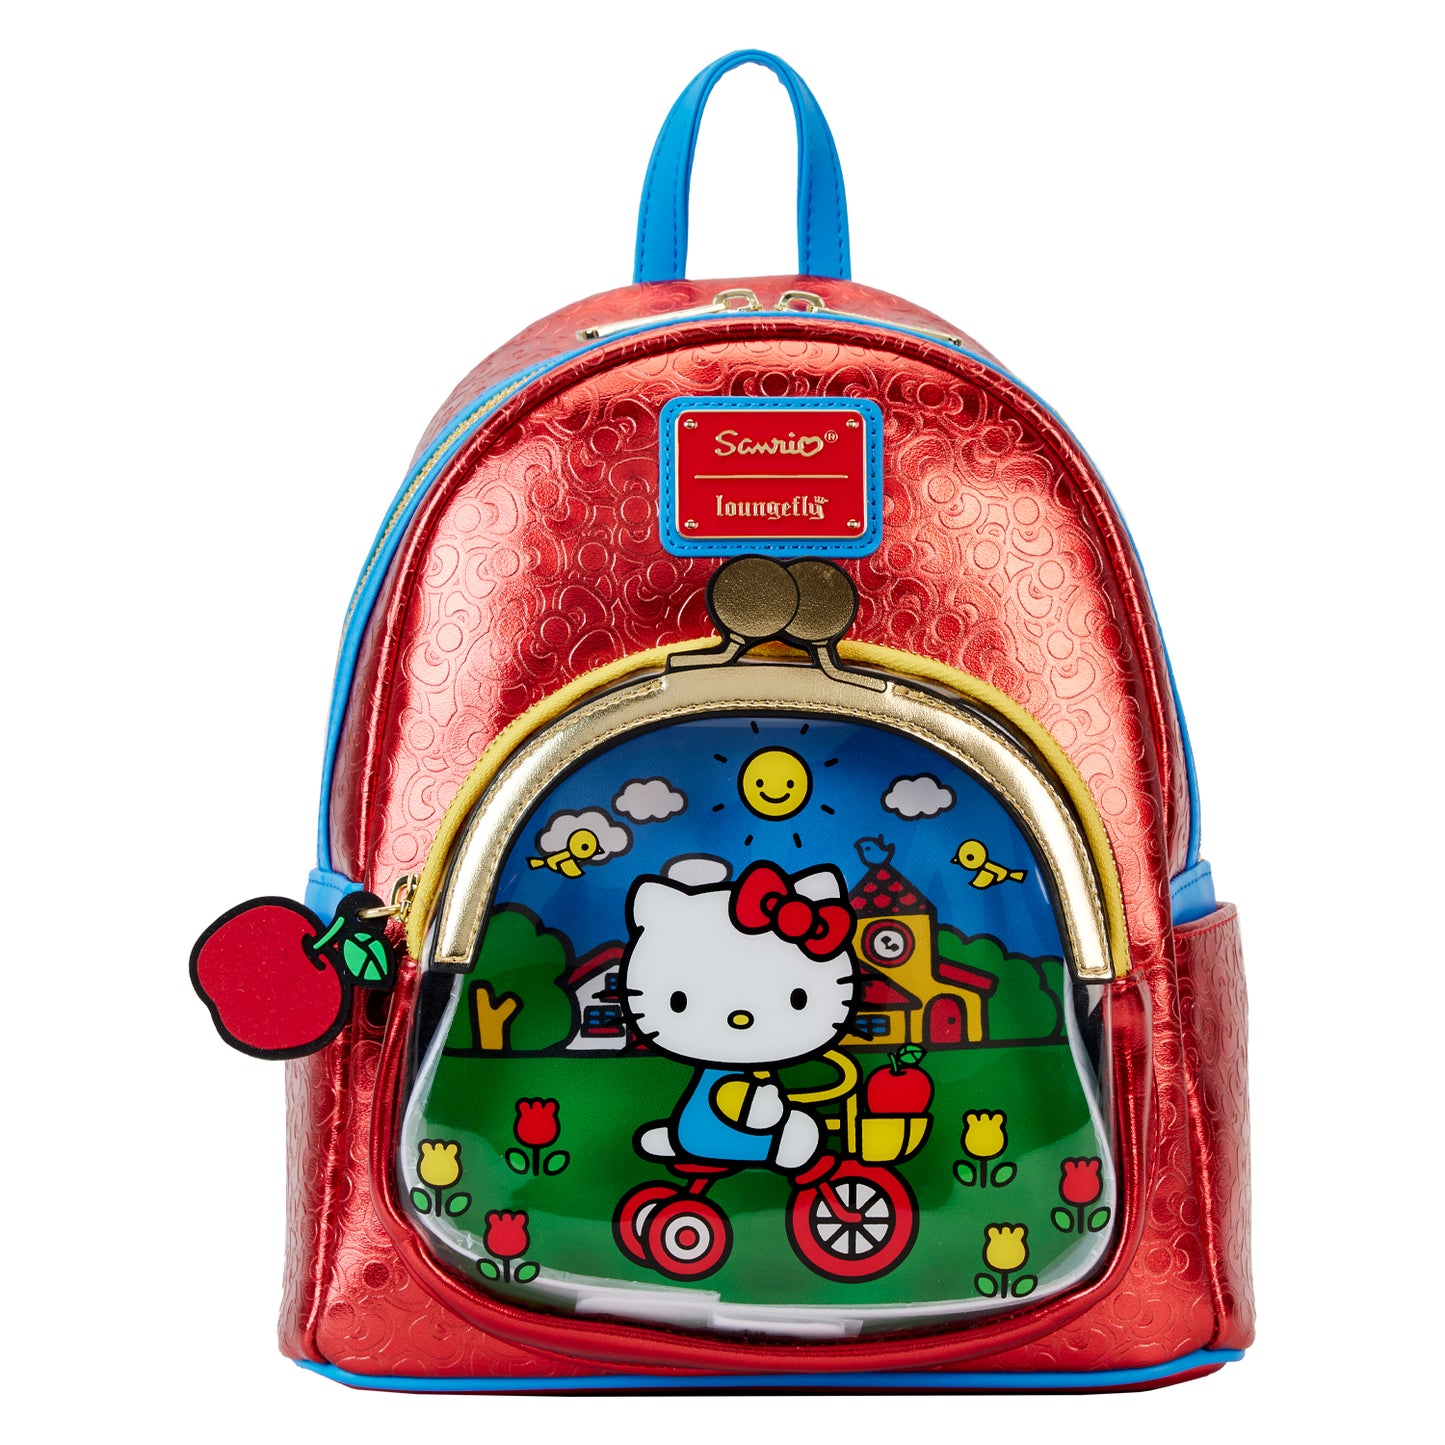 Sanrio Hello Kitty 50th Anniversary Coin Bag Metallic Mini Backpack